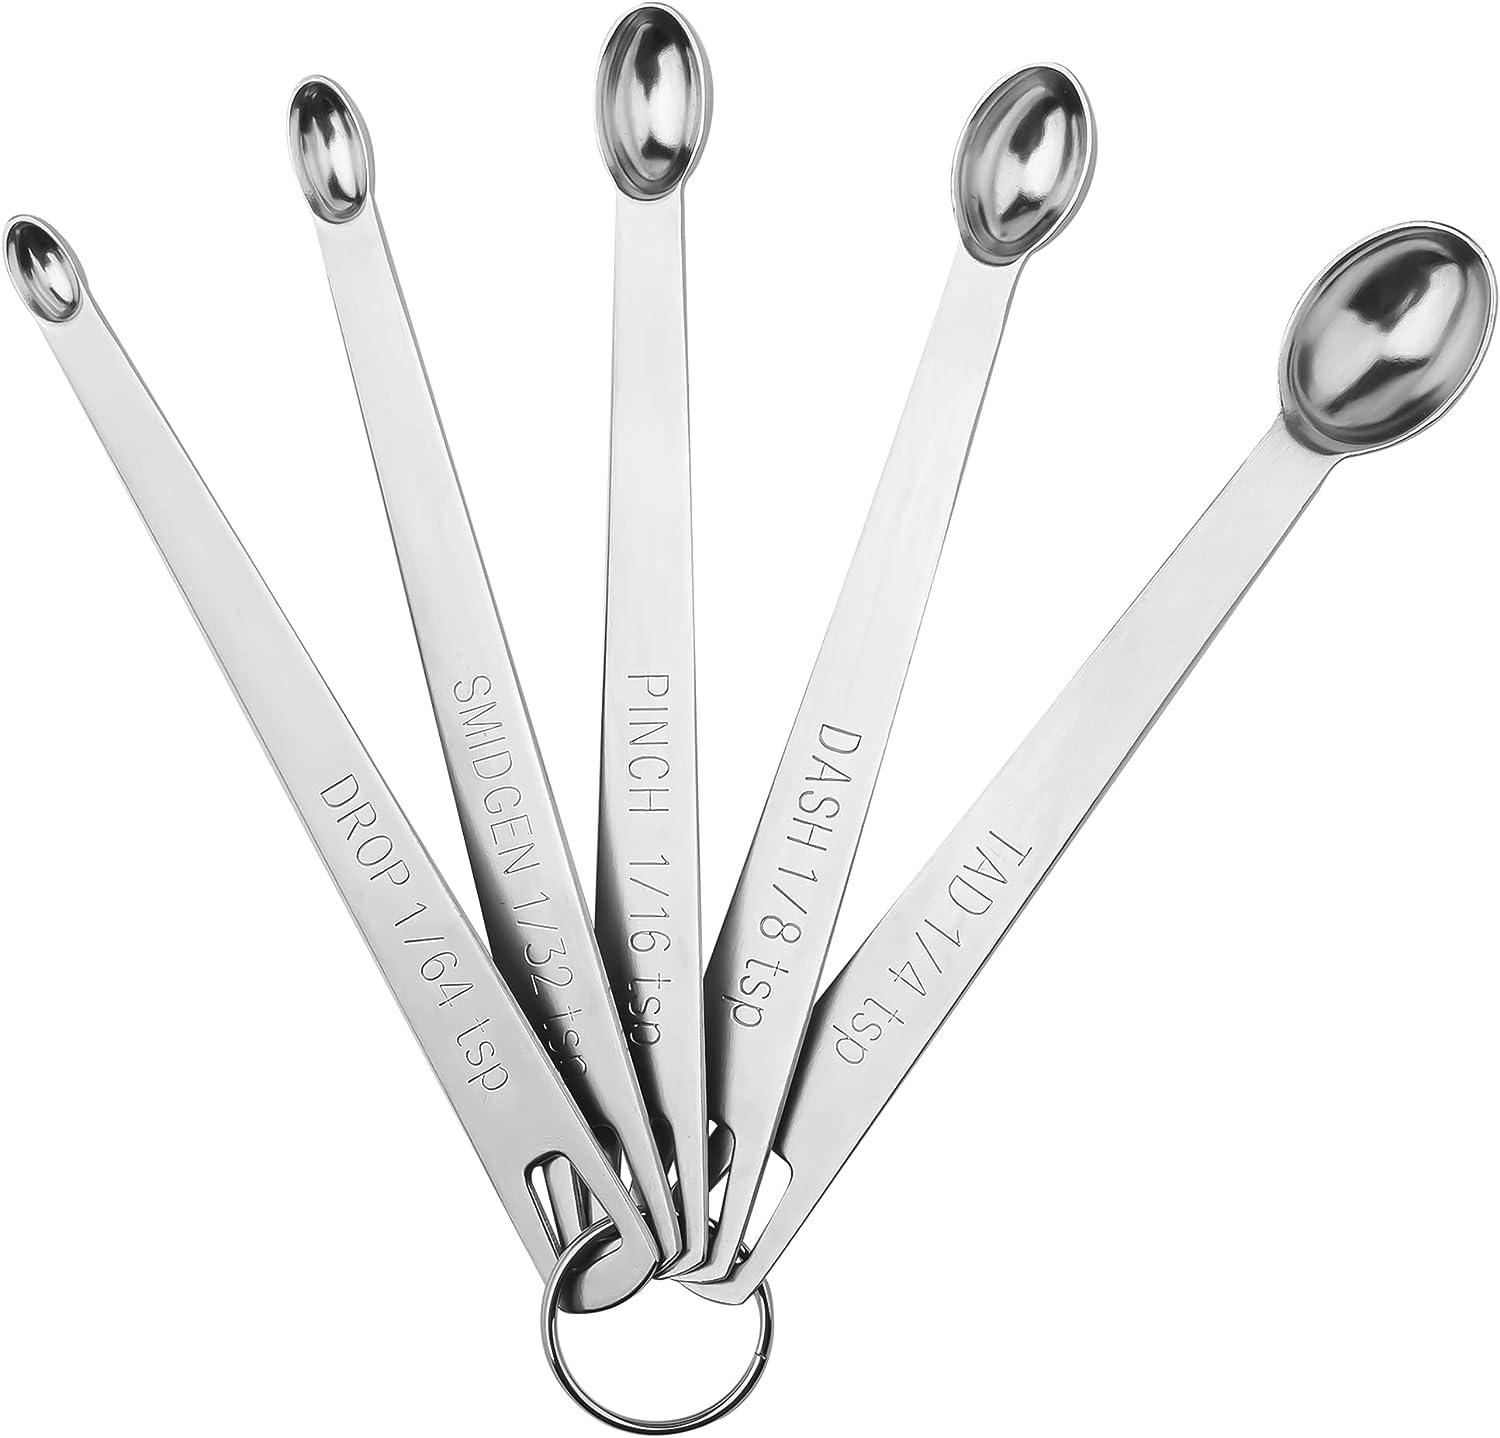 Mini Stainless Steel Teaspoon Measuring Spoon Set (1/4, 1/8, 1/16, 1/32, 1/64) - Anjelstore 